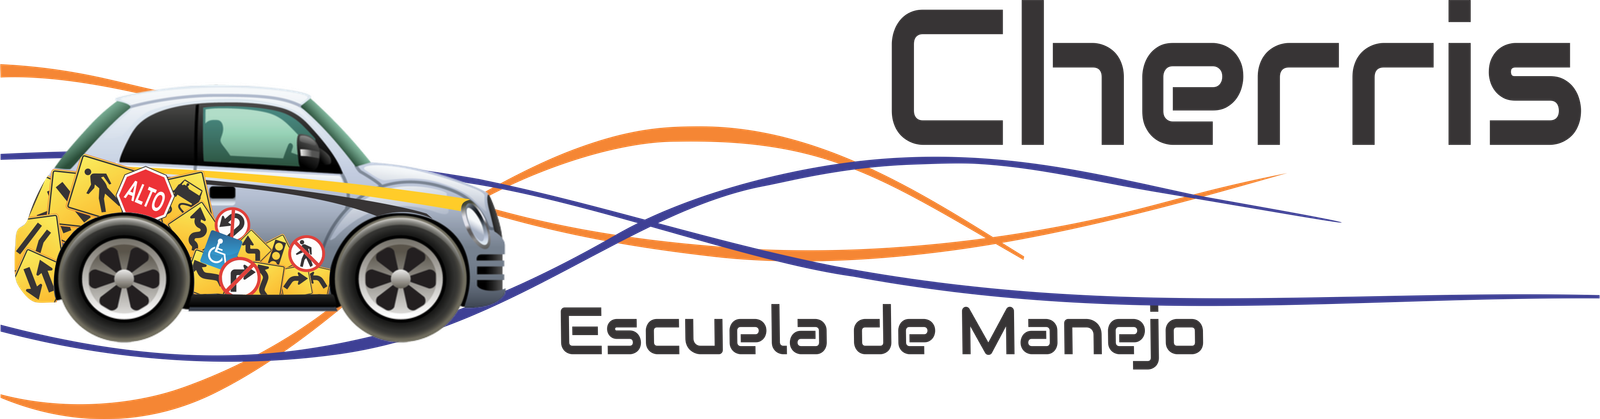 cherris ESCUELA DE MANEJO logo